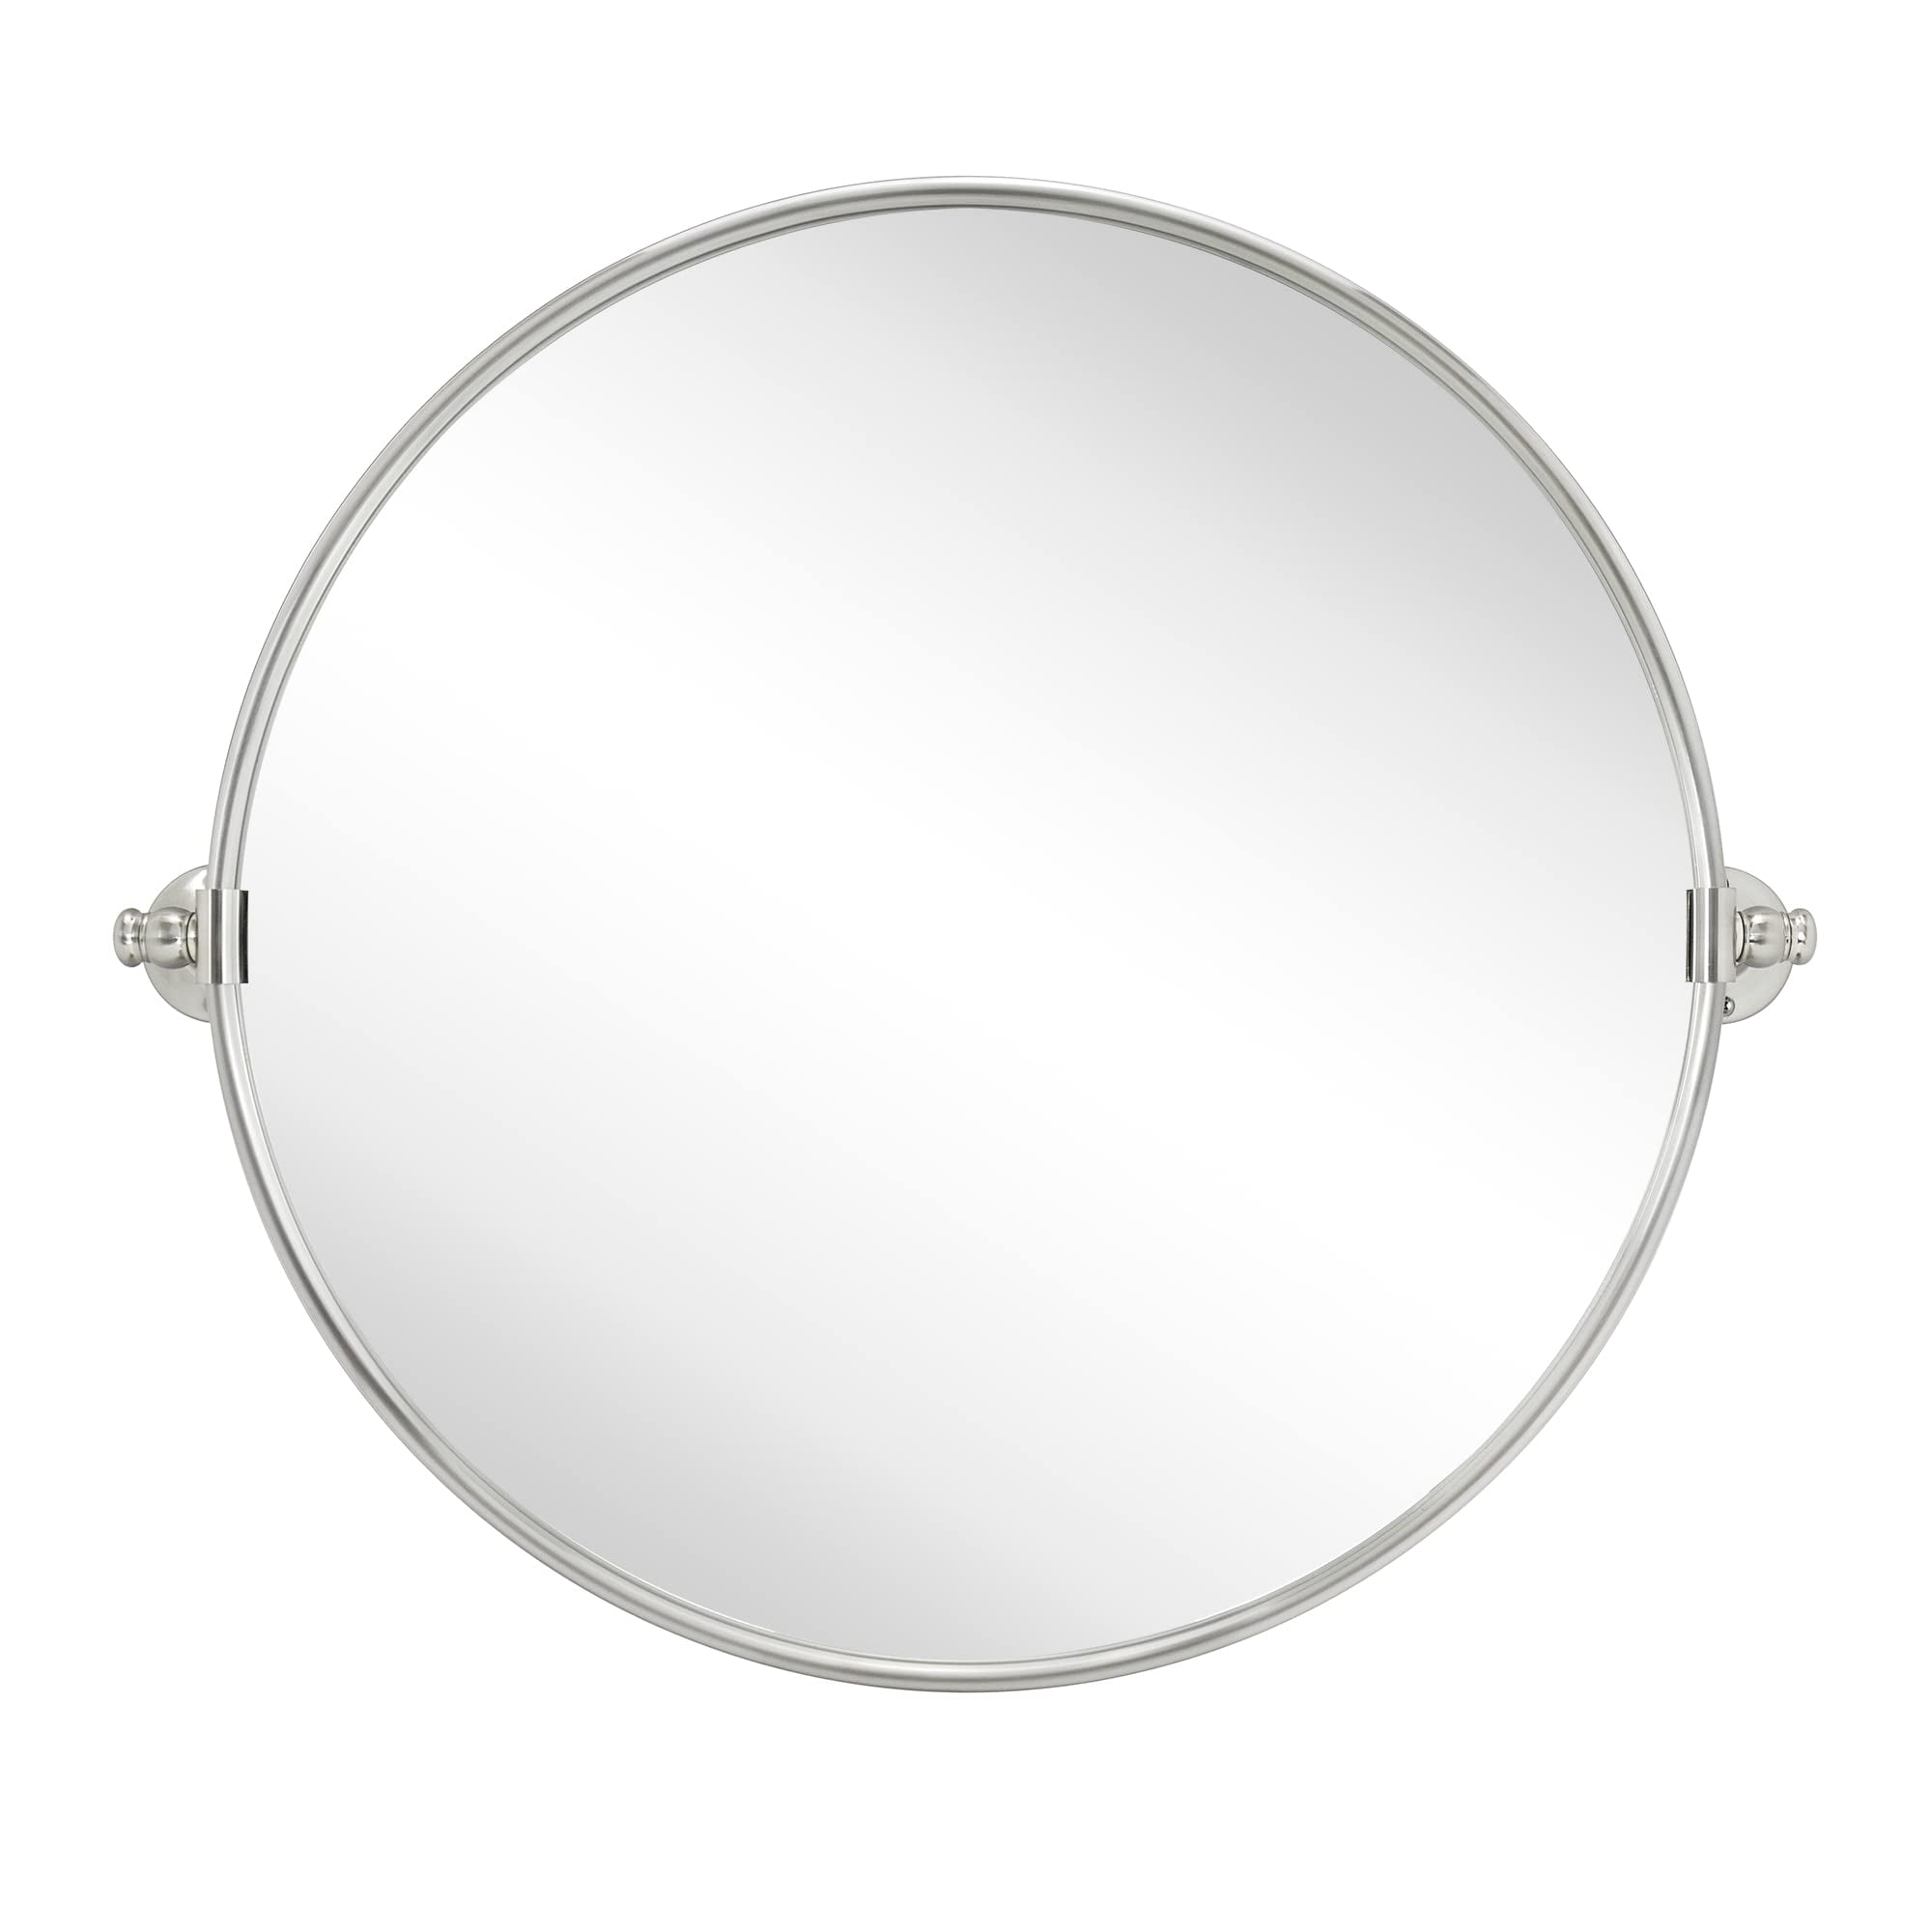 Moon Mirror Black Oval Bathroom Mirrors Oval Pivot Mirrors Tilting Bathroom Mirrors